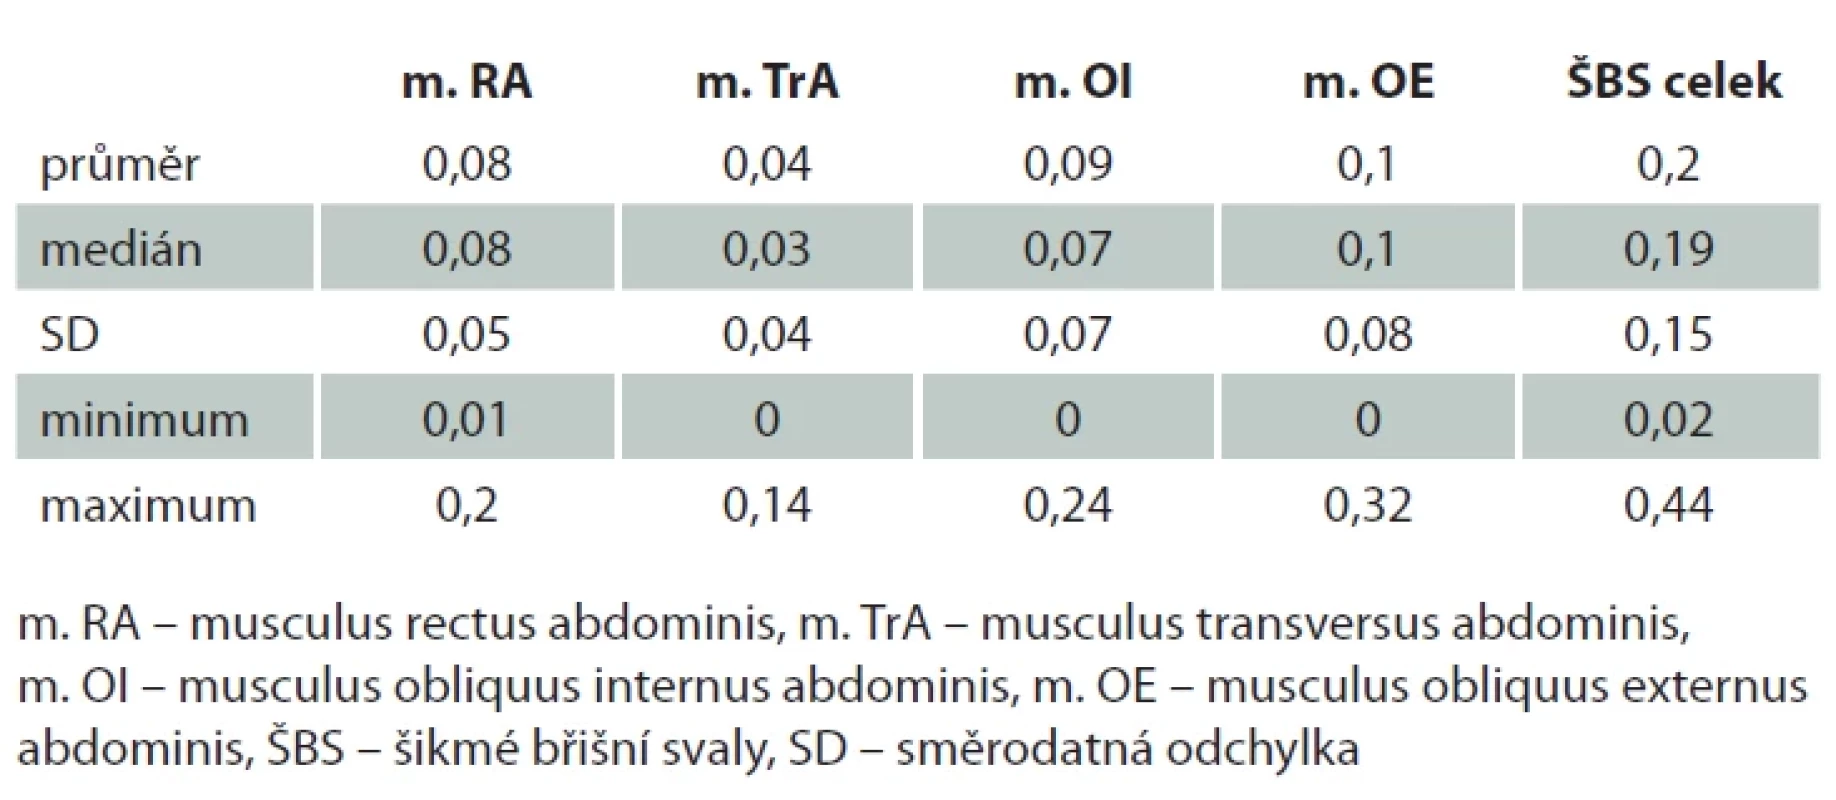 Popisná statistika hodnot asymetrie břišních svalů (cm). Tab. 3. Descriptive statistics of abdominal muscle asymmetry values (cm).